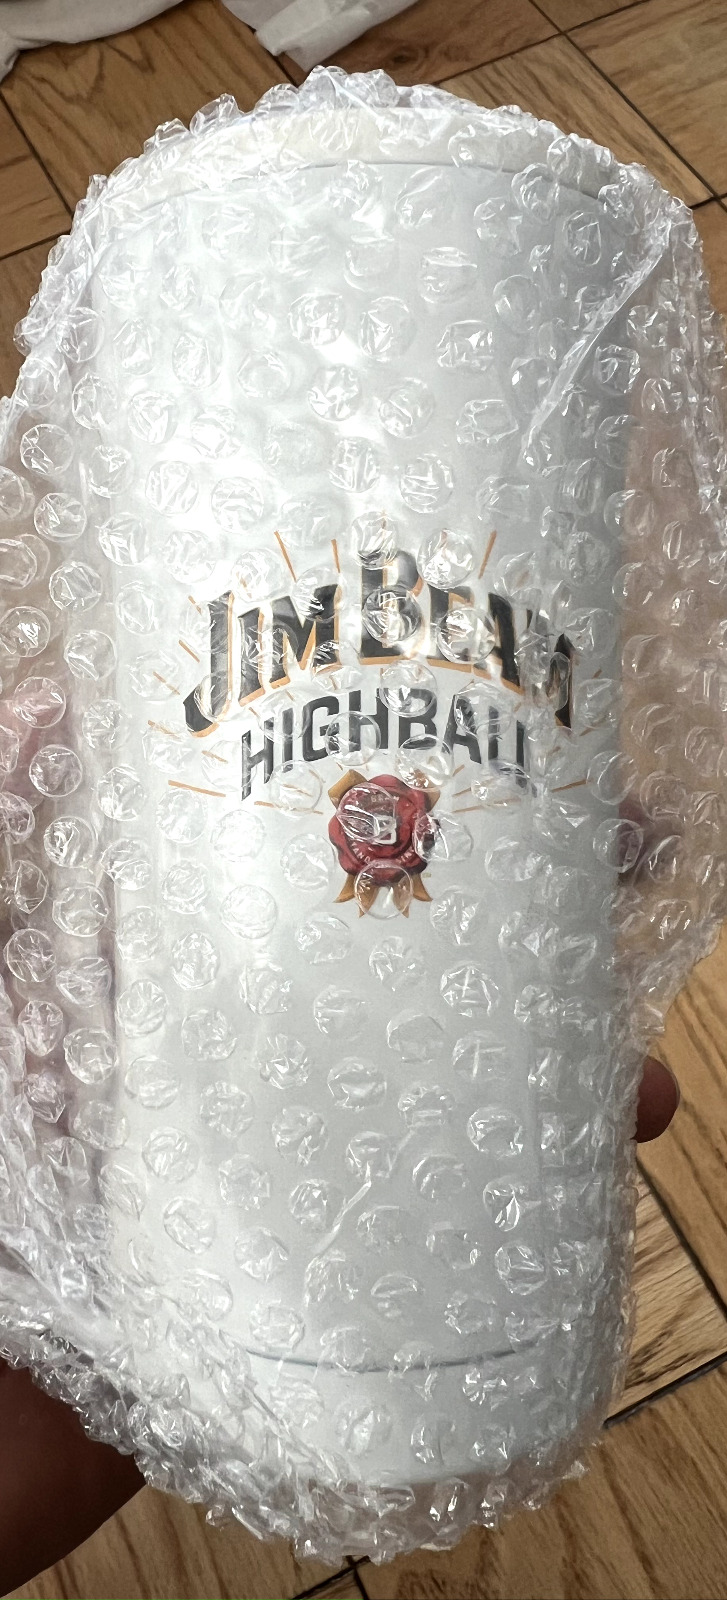 Jim Beam Highball Metal Skinny Can Cooler Insulator Koozie